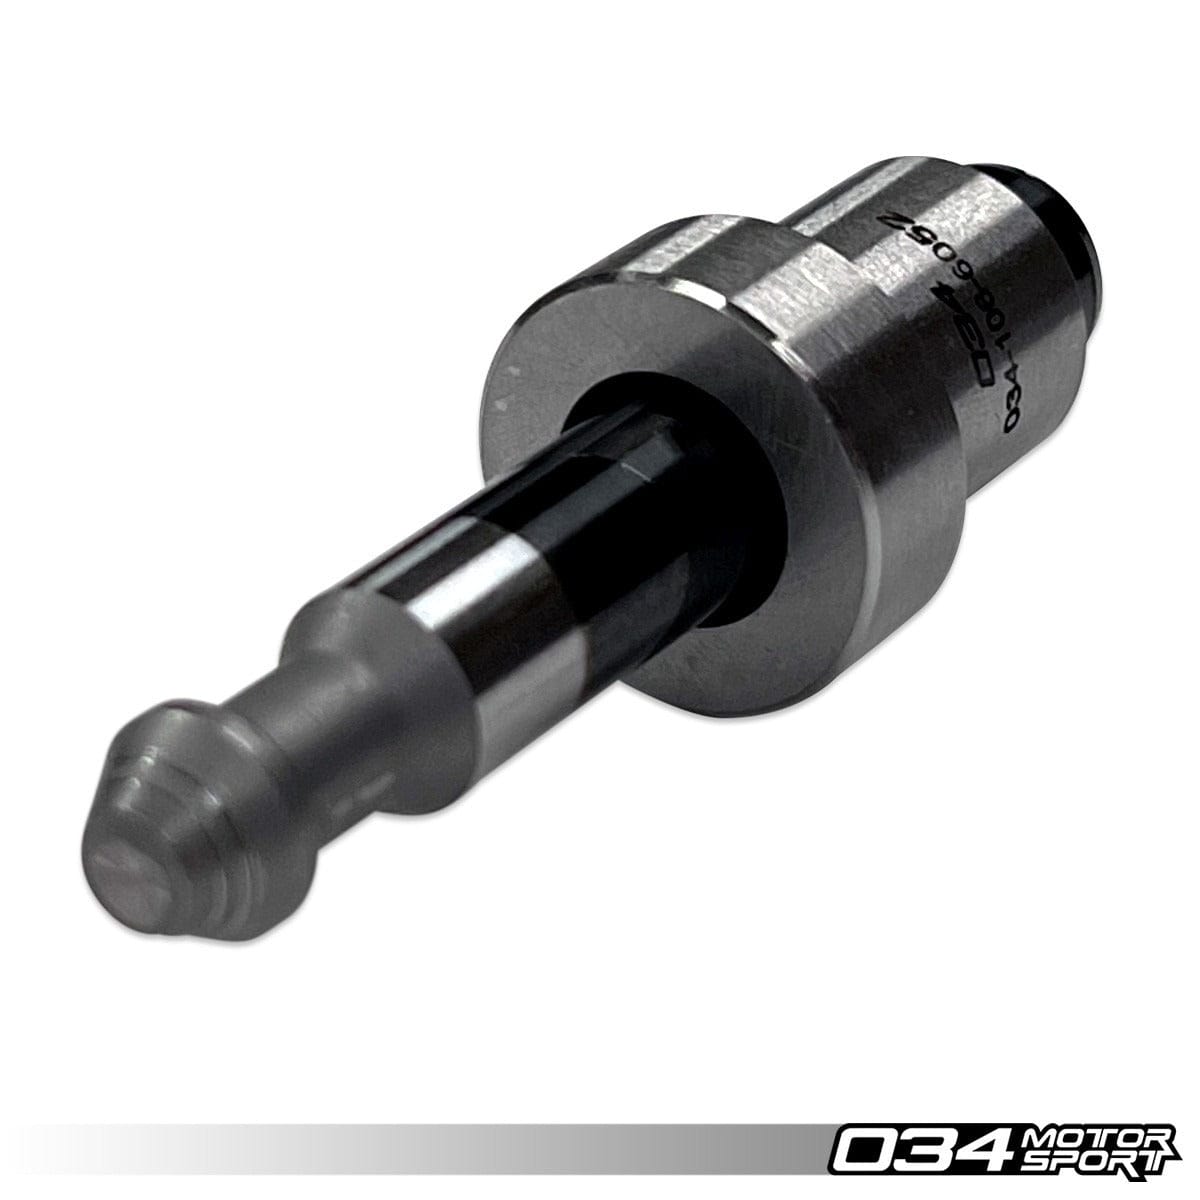 034 Motorsport High Pressure Fuel Pump Piston Upgrade Kit - Audi / 4.0T